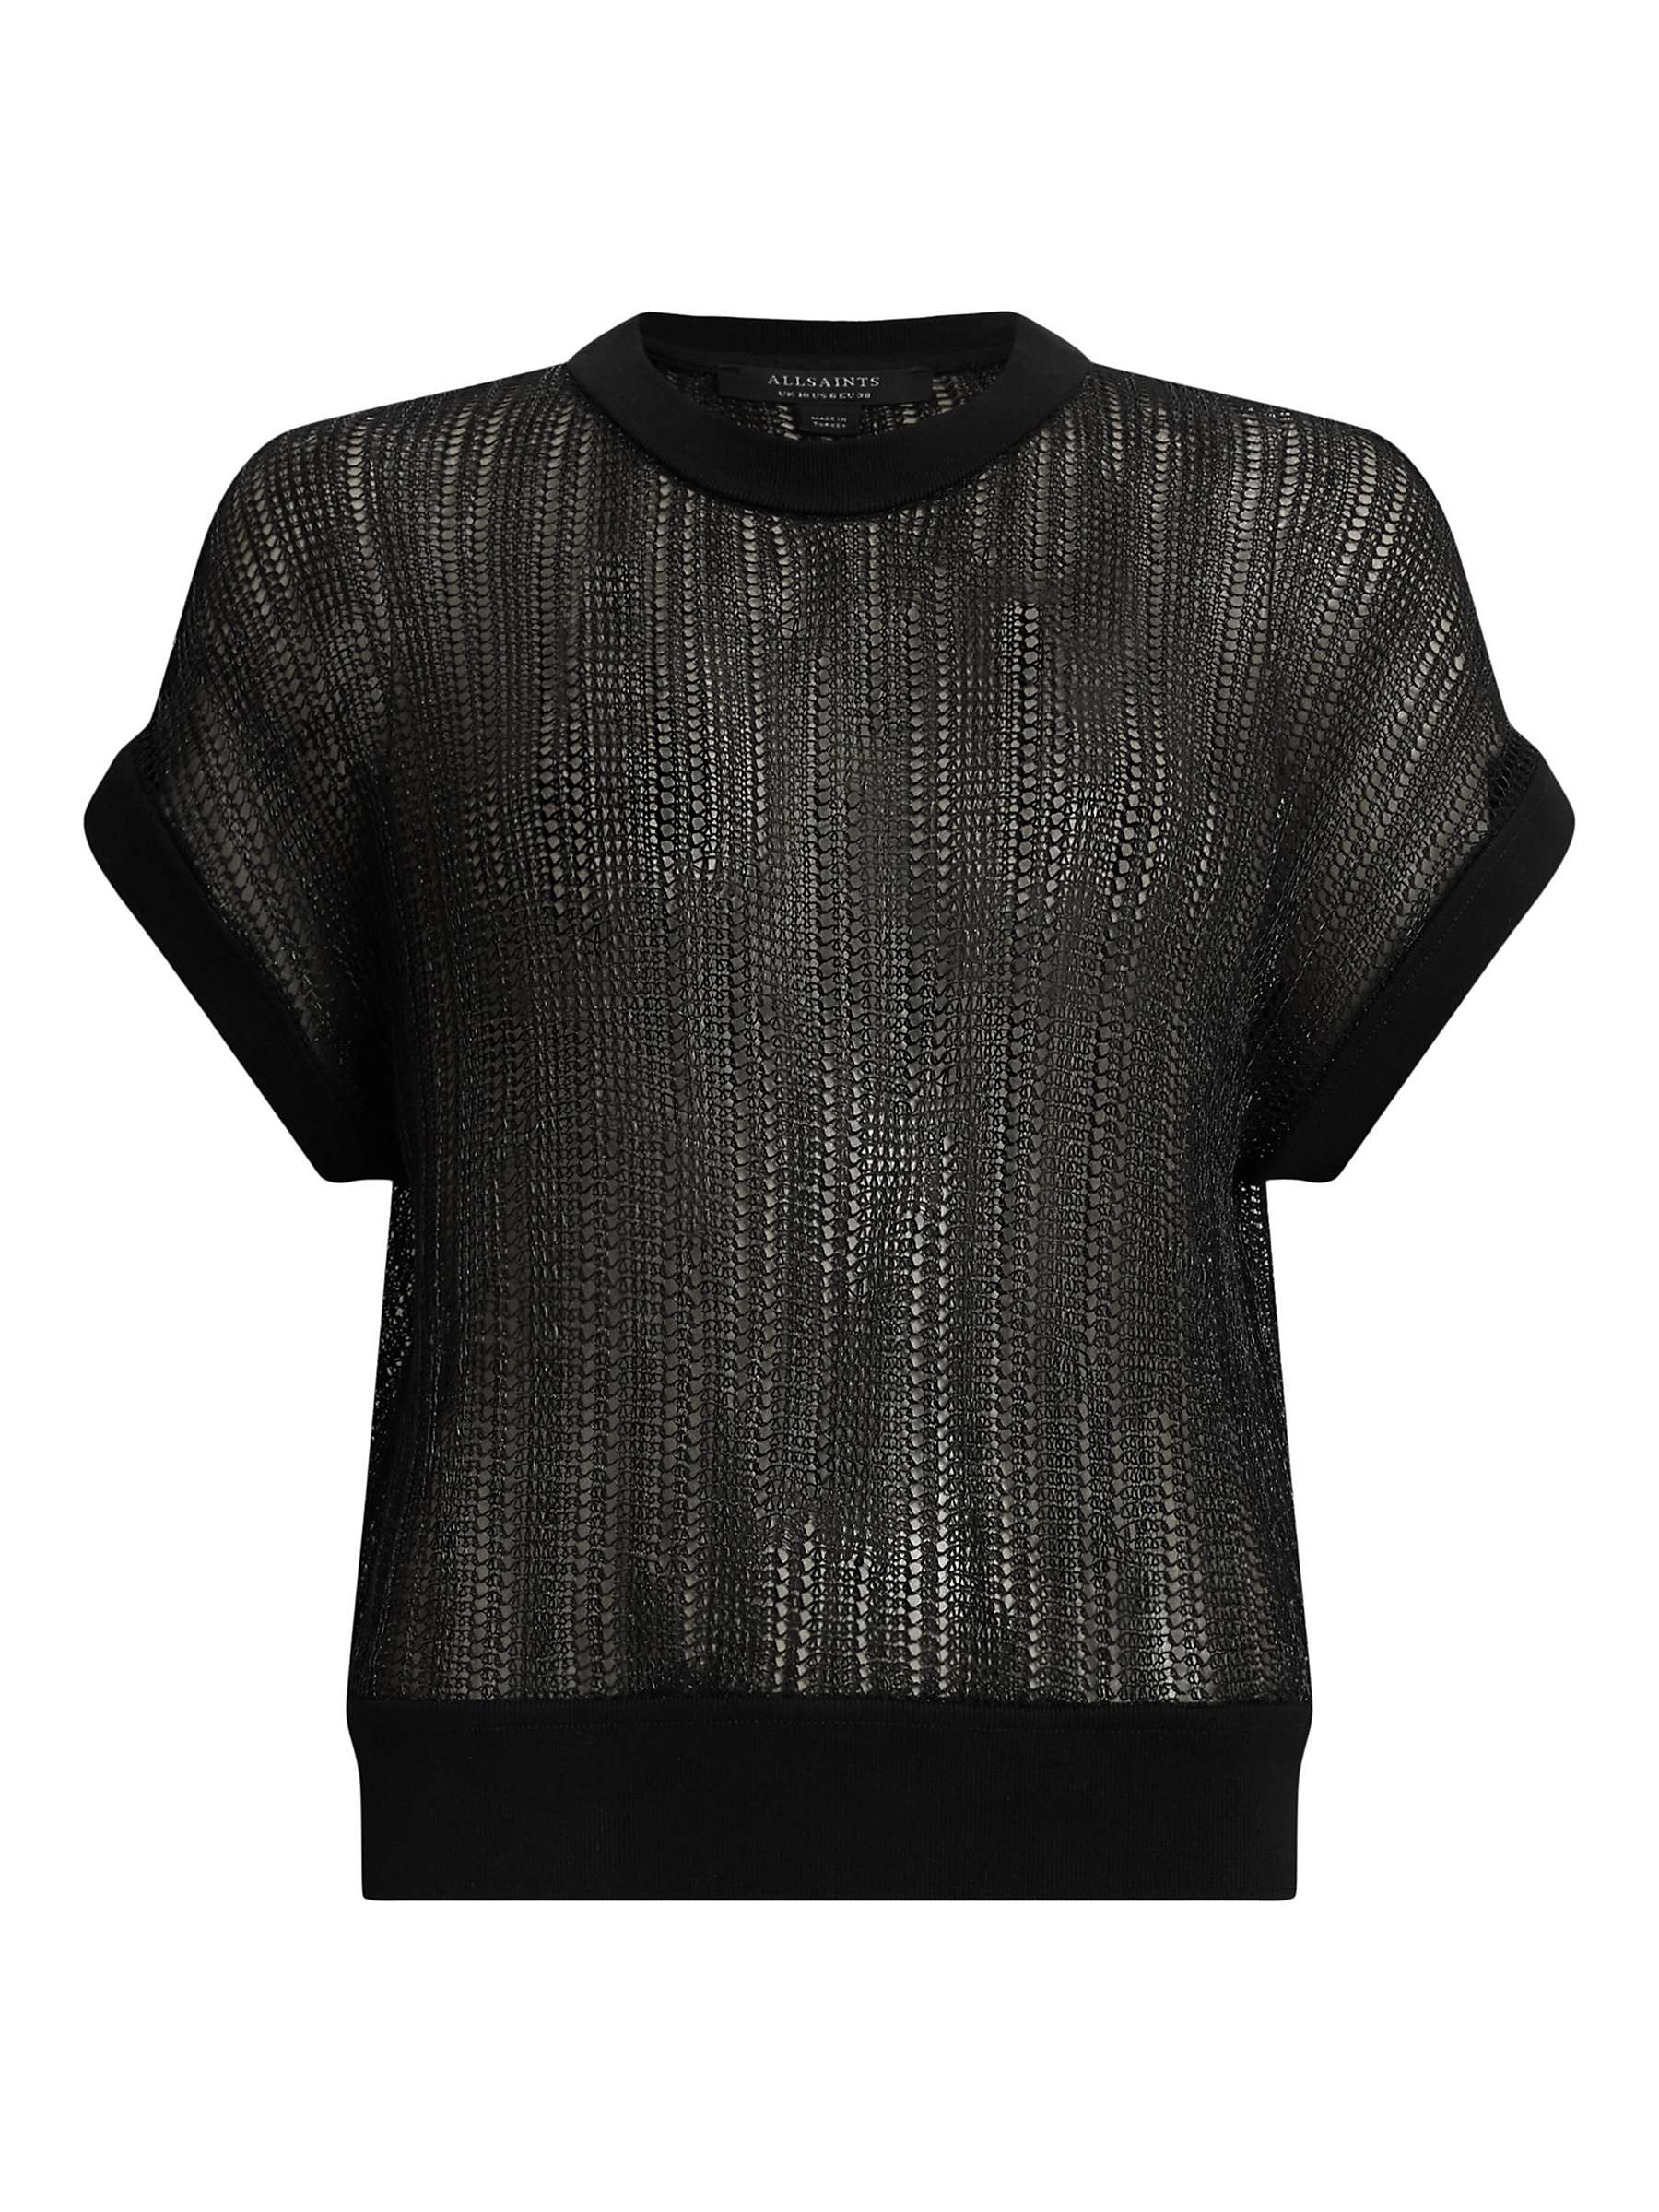 Buy AllSaints Giana Metallic T-Shirt Online at johnlewis.com